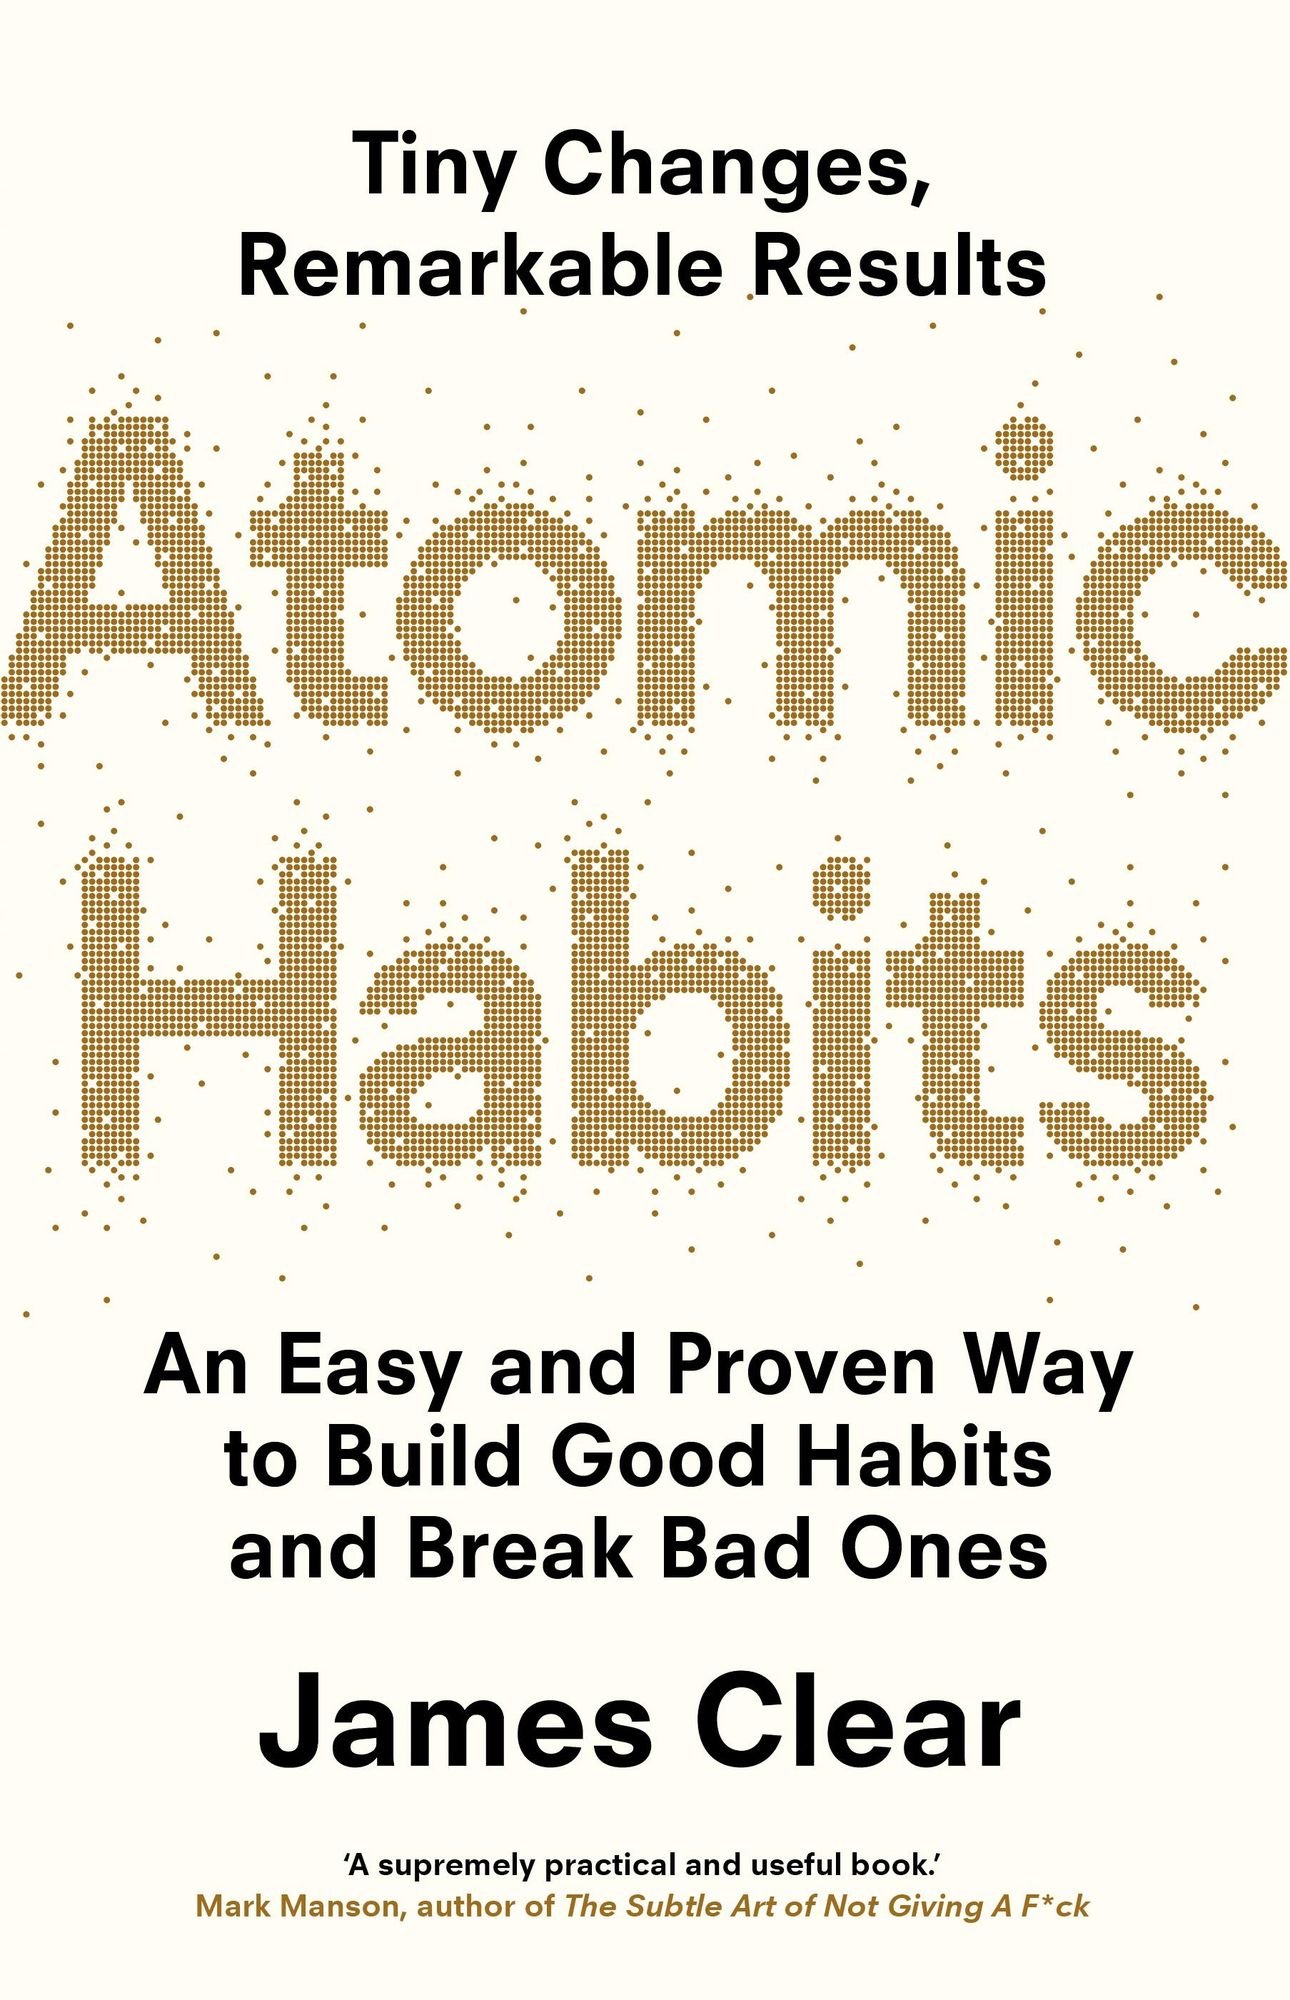 James Clear: Atomic Habits (Paperback, 2018, Random House Business Books)